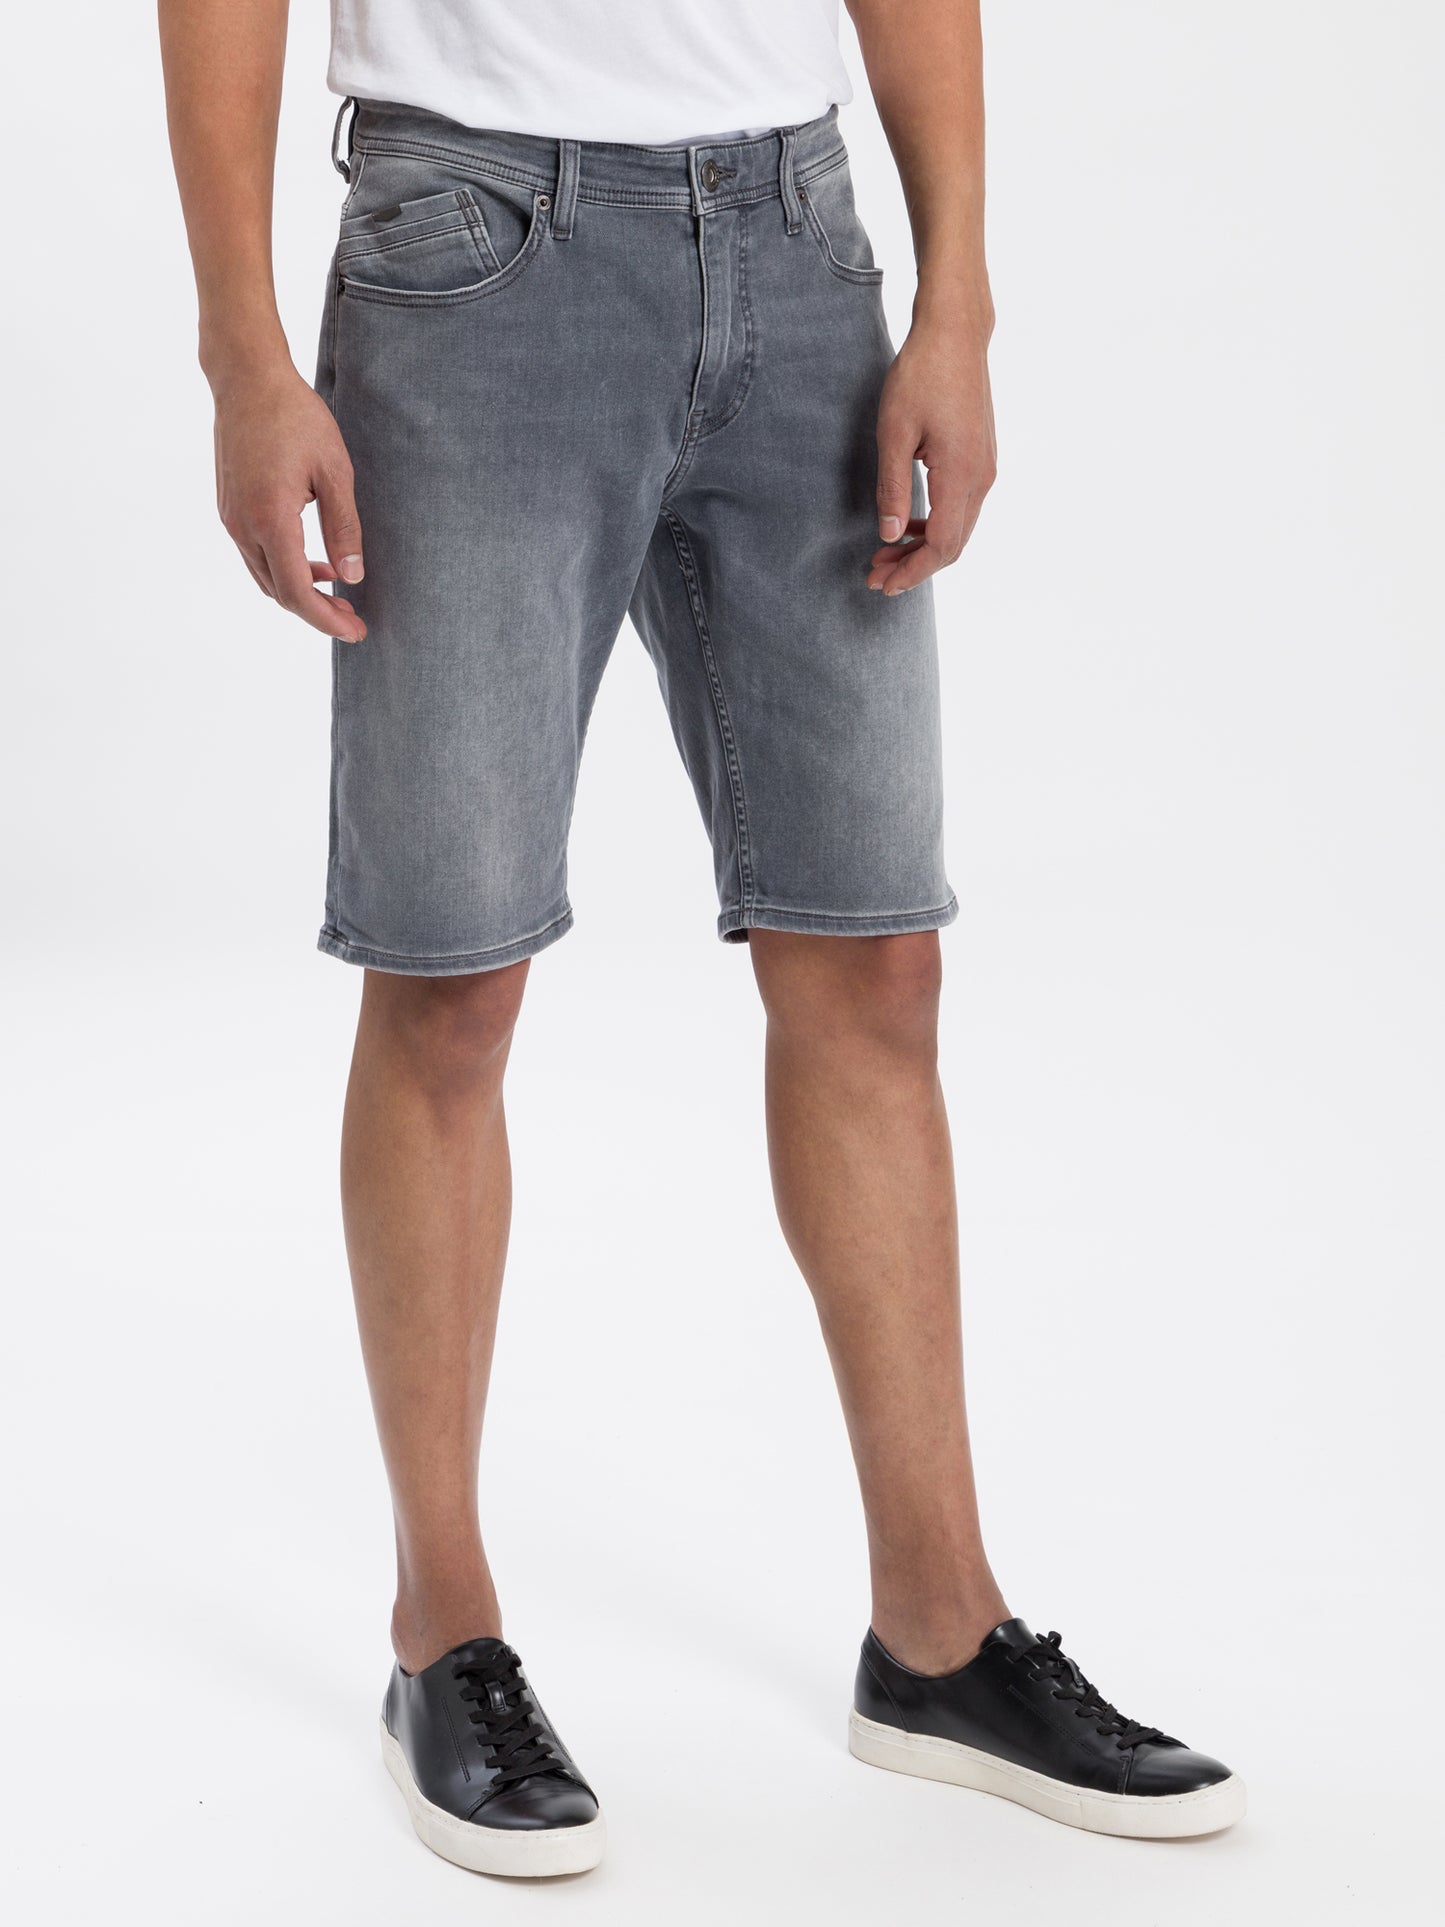 Leom men's jeans regular shorts grey